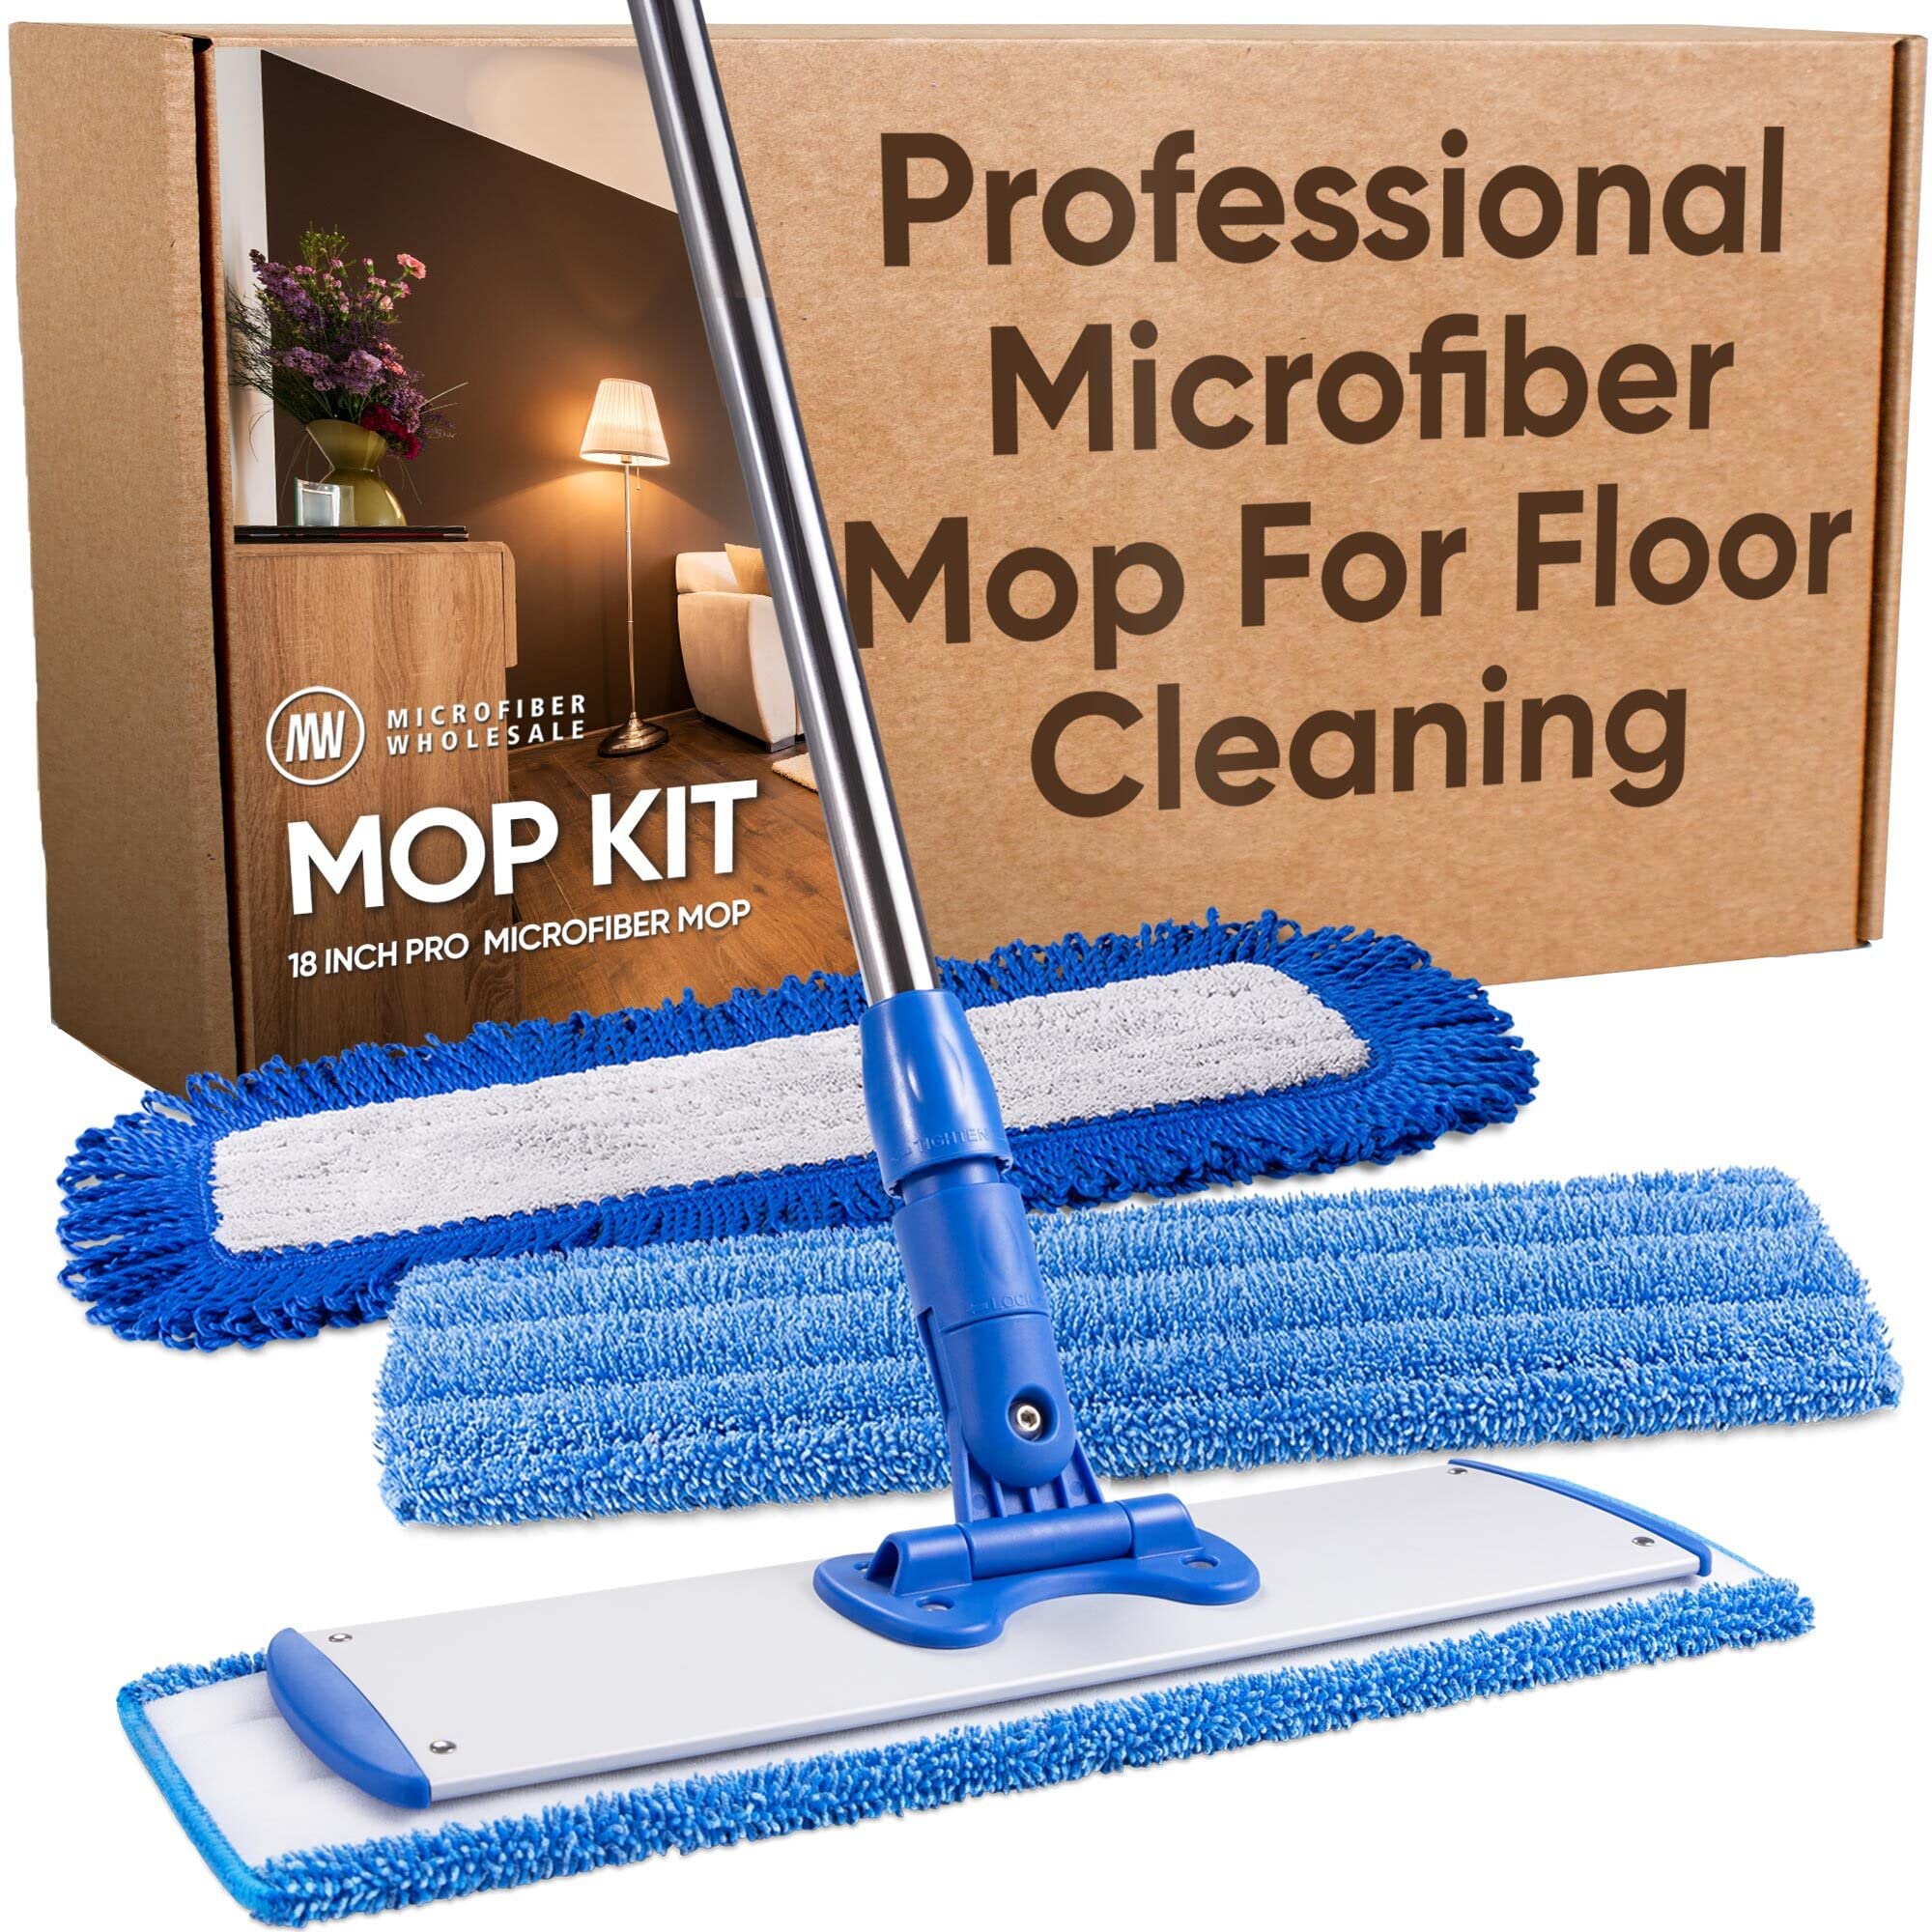 Buff 18 Professional Microfiber Mop Review - 's Best Mop?